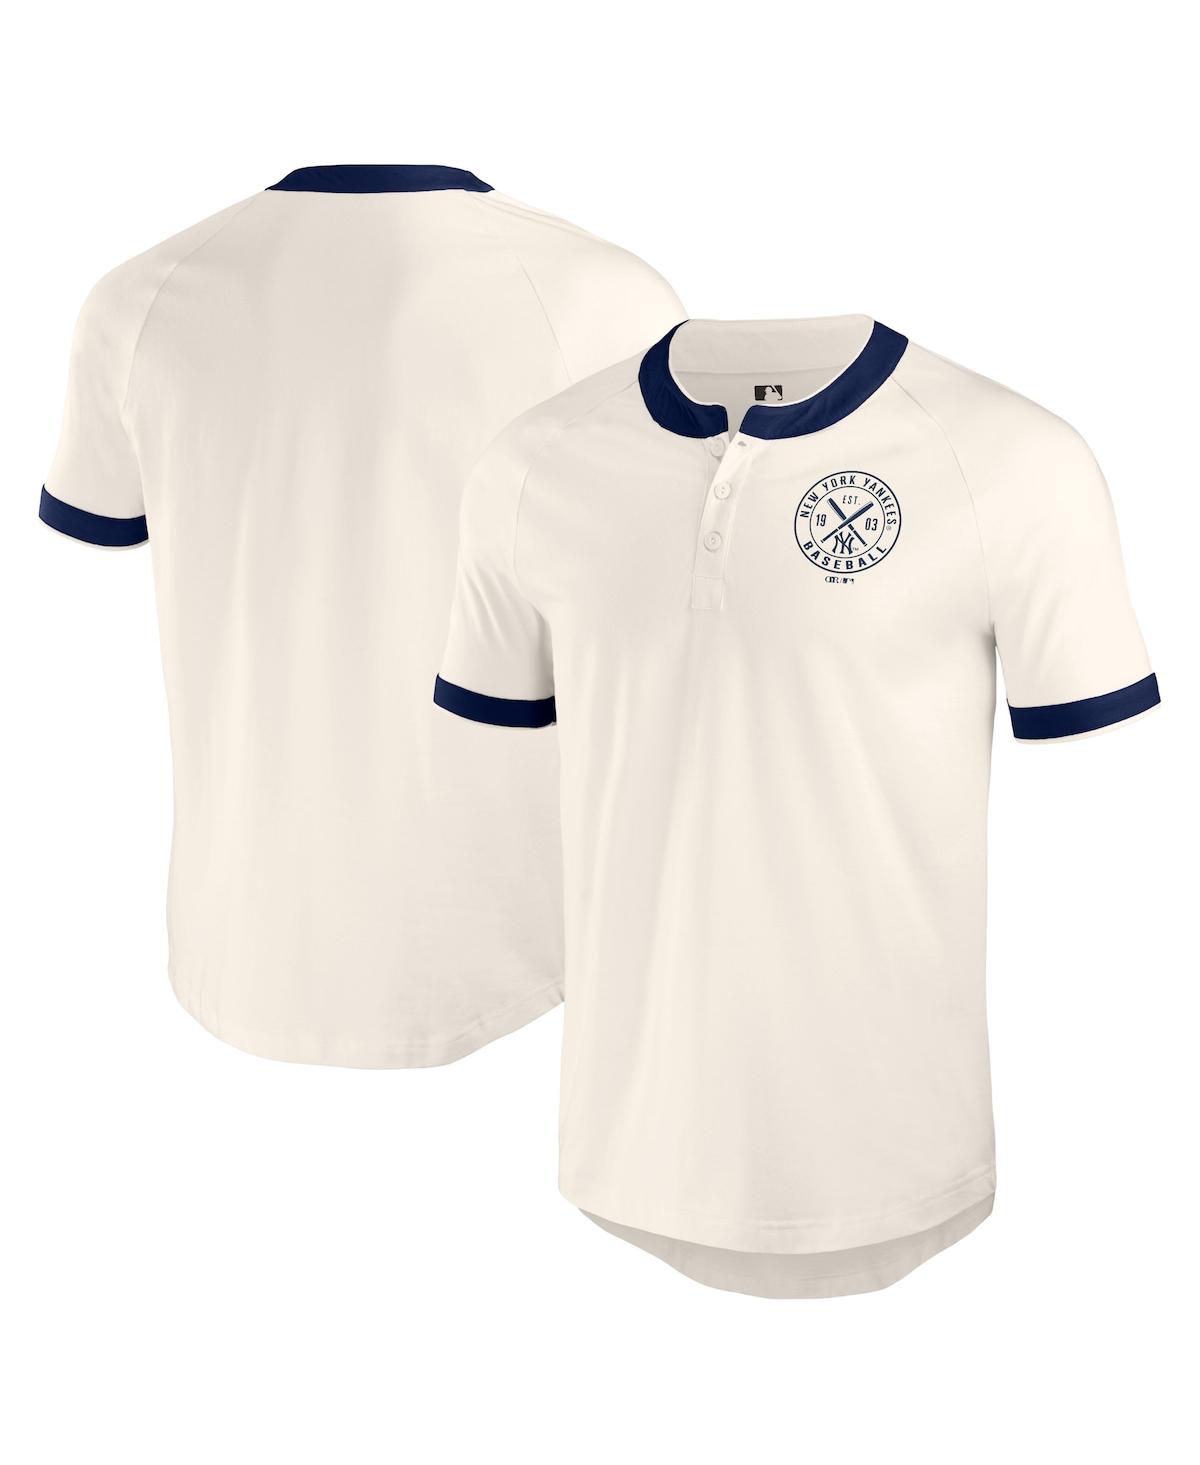 Darius Rucker Men's Collection by Fanatics White Atlanta Braves Henley Raglan T-Shirt - White, Navy